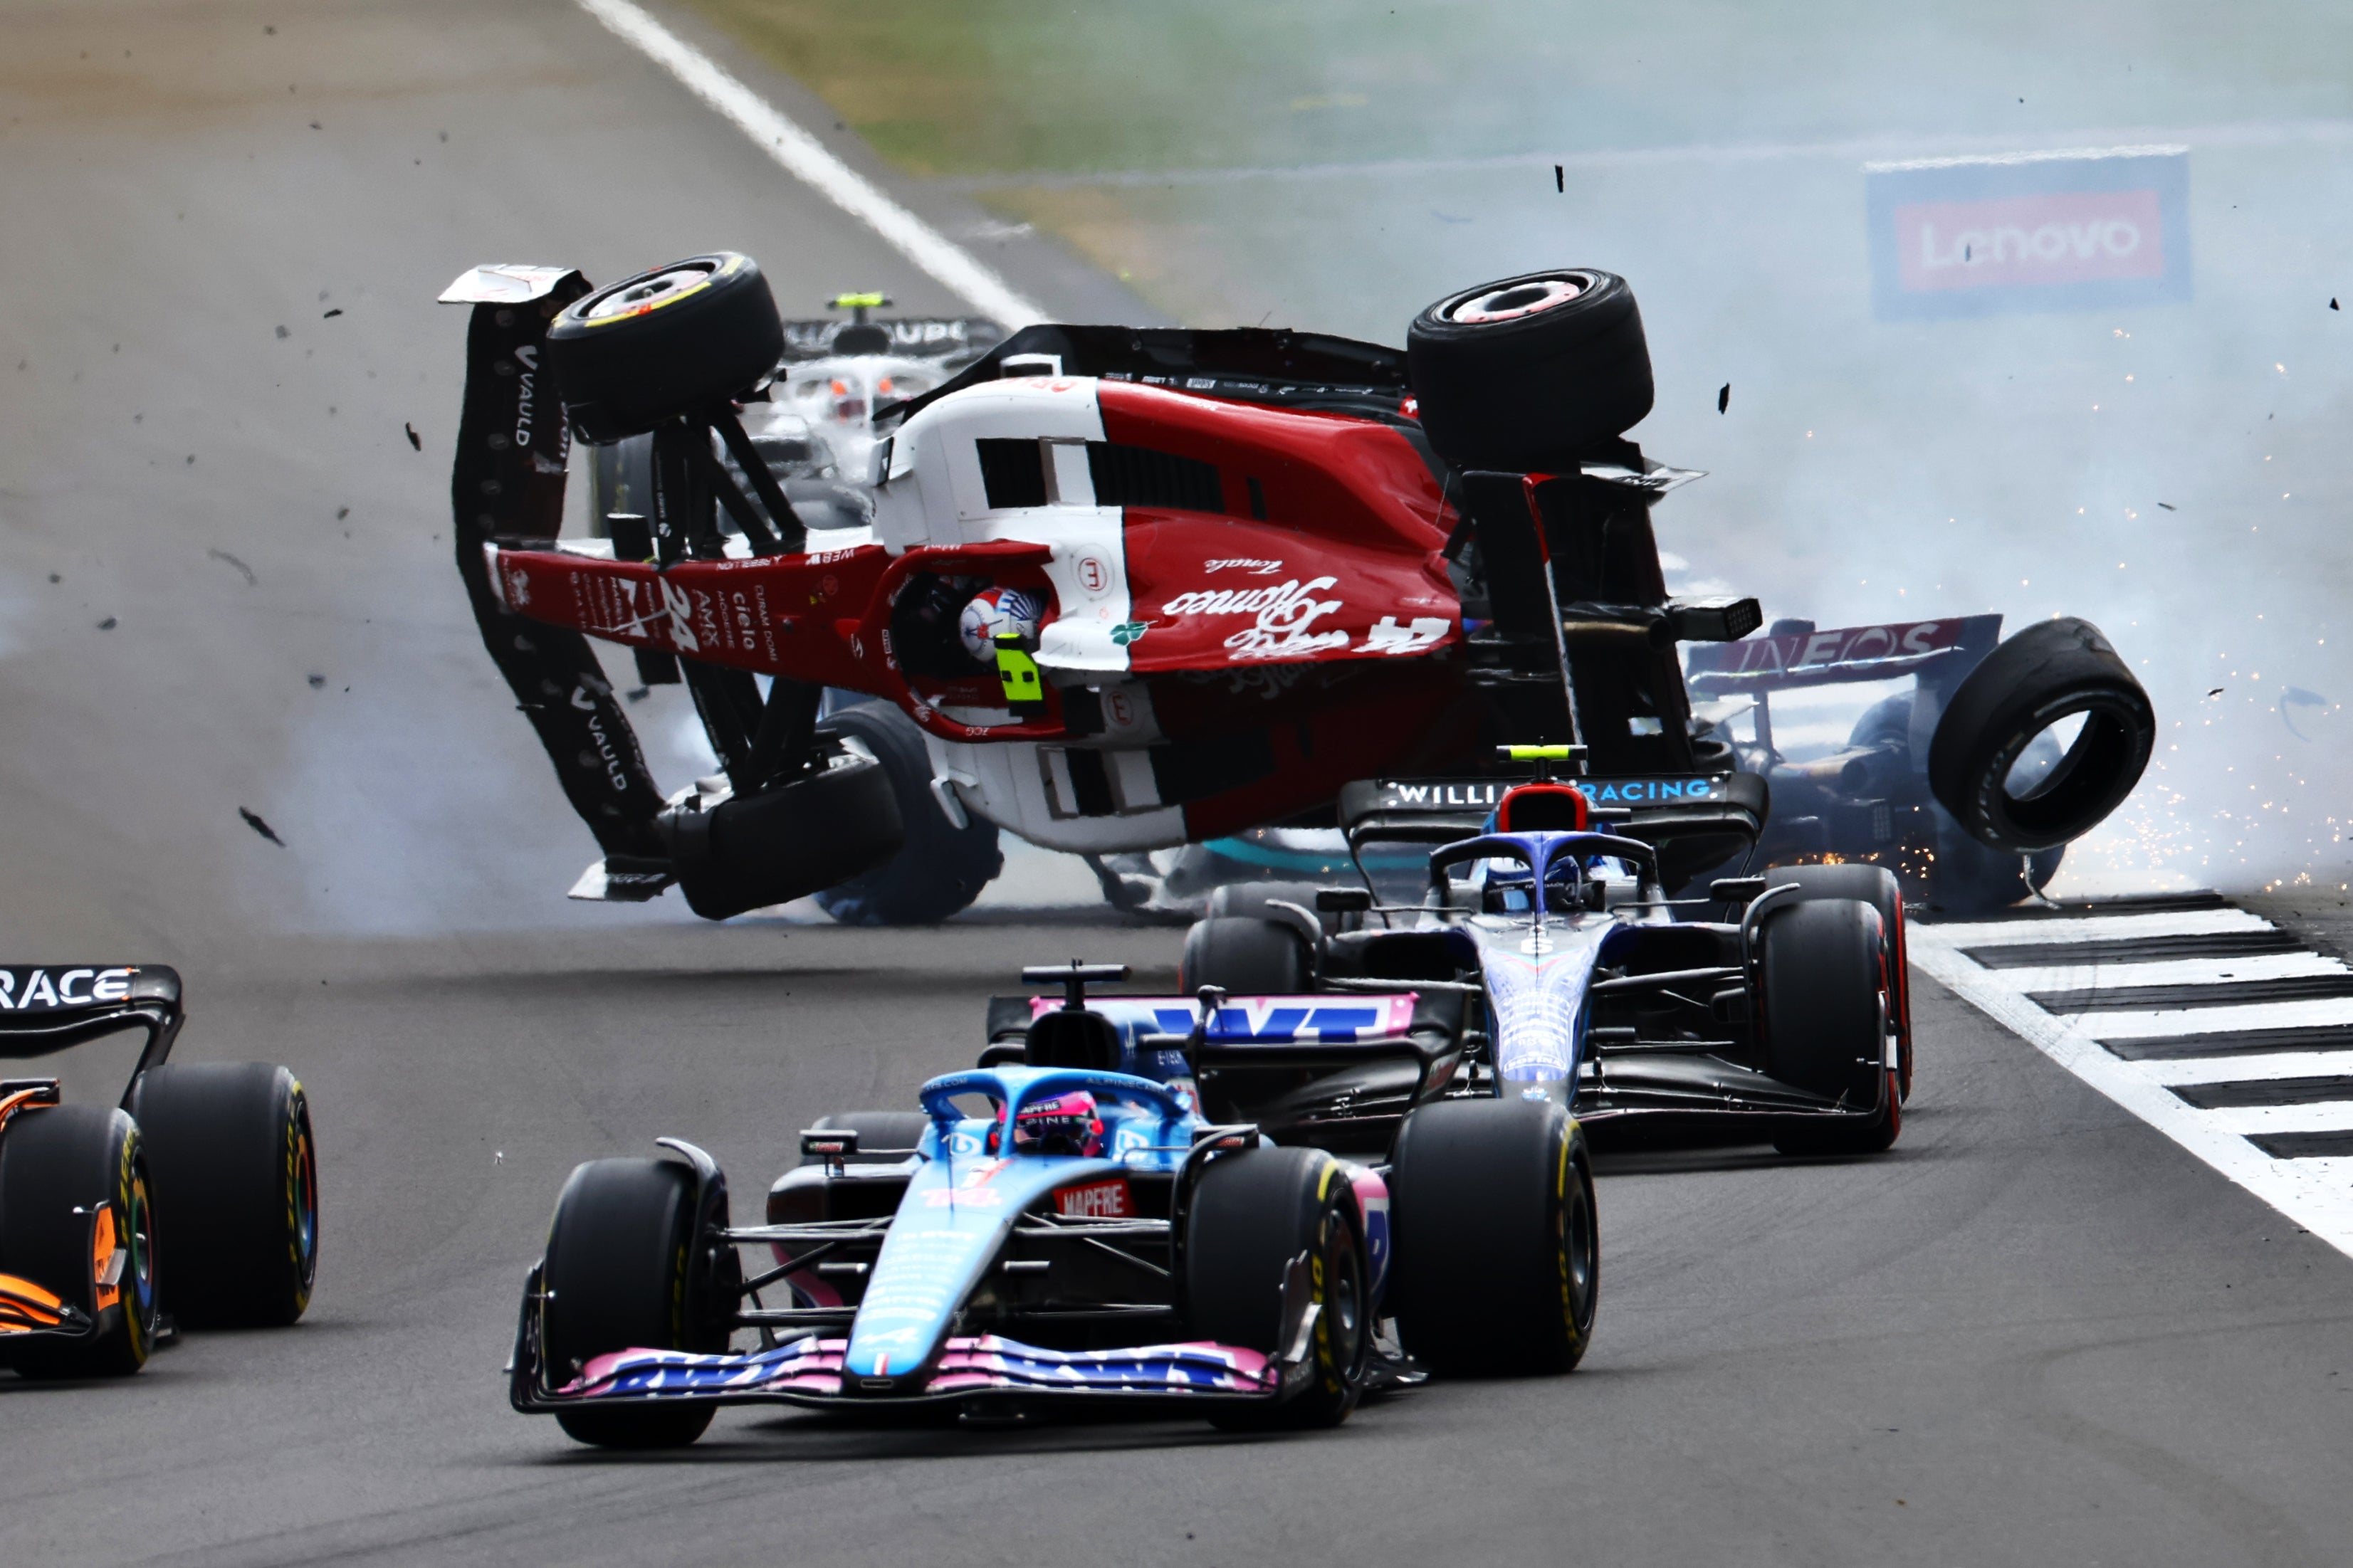 Zhou’s crash at Silverstone was a scary sight